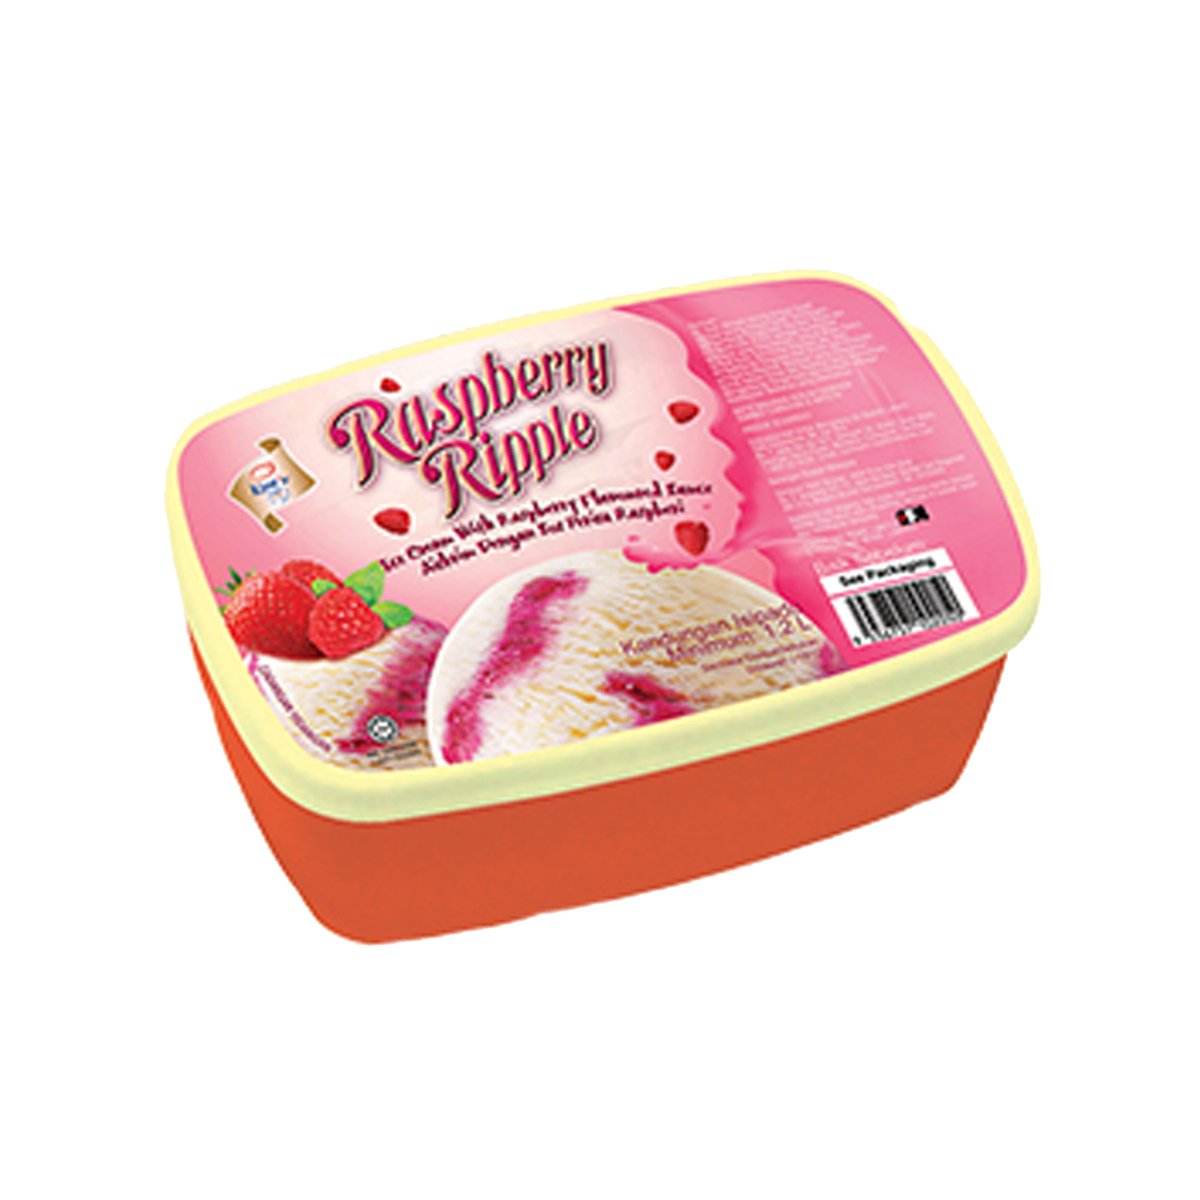 King's Raspberry Ripple Ice Cream 1.2Litre